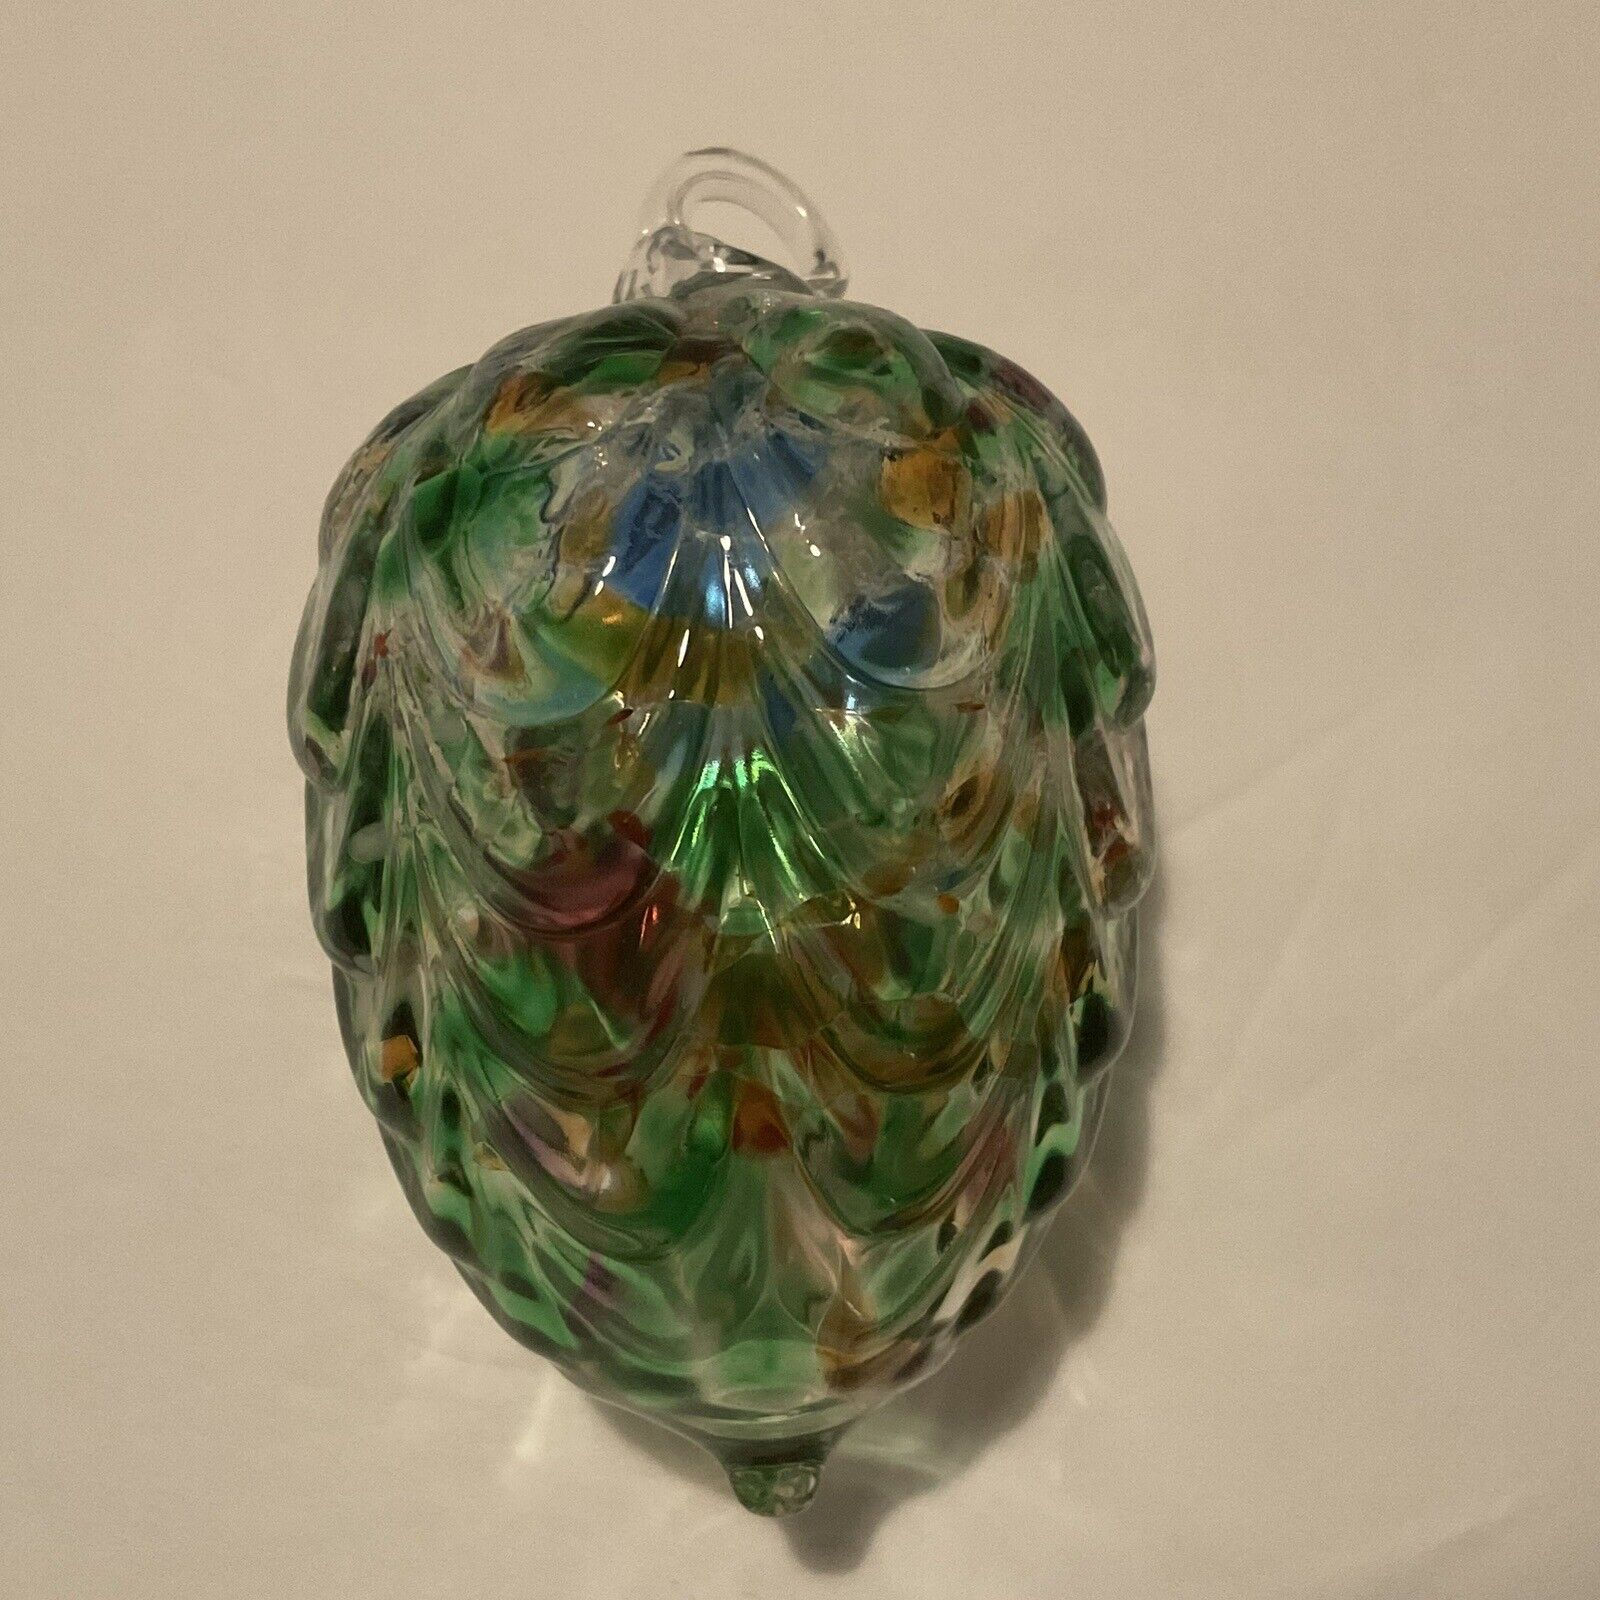 Handblown Art Glass Multicolored Green Ornament 4” Length Scalloped Pattern